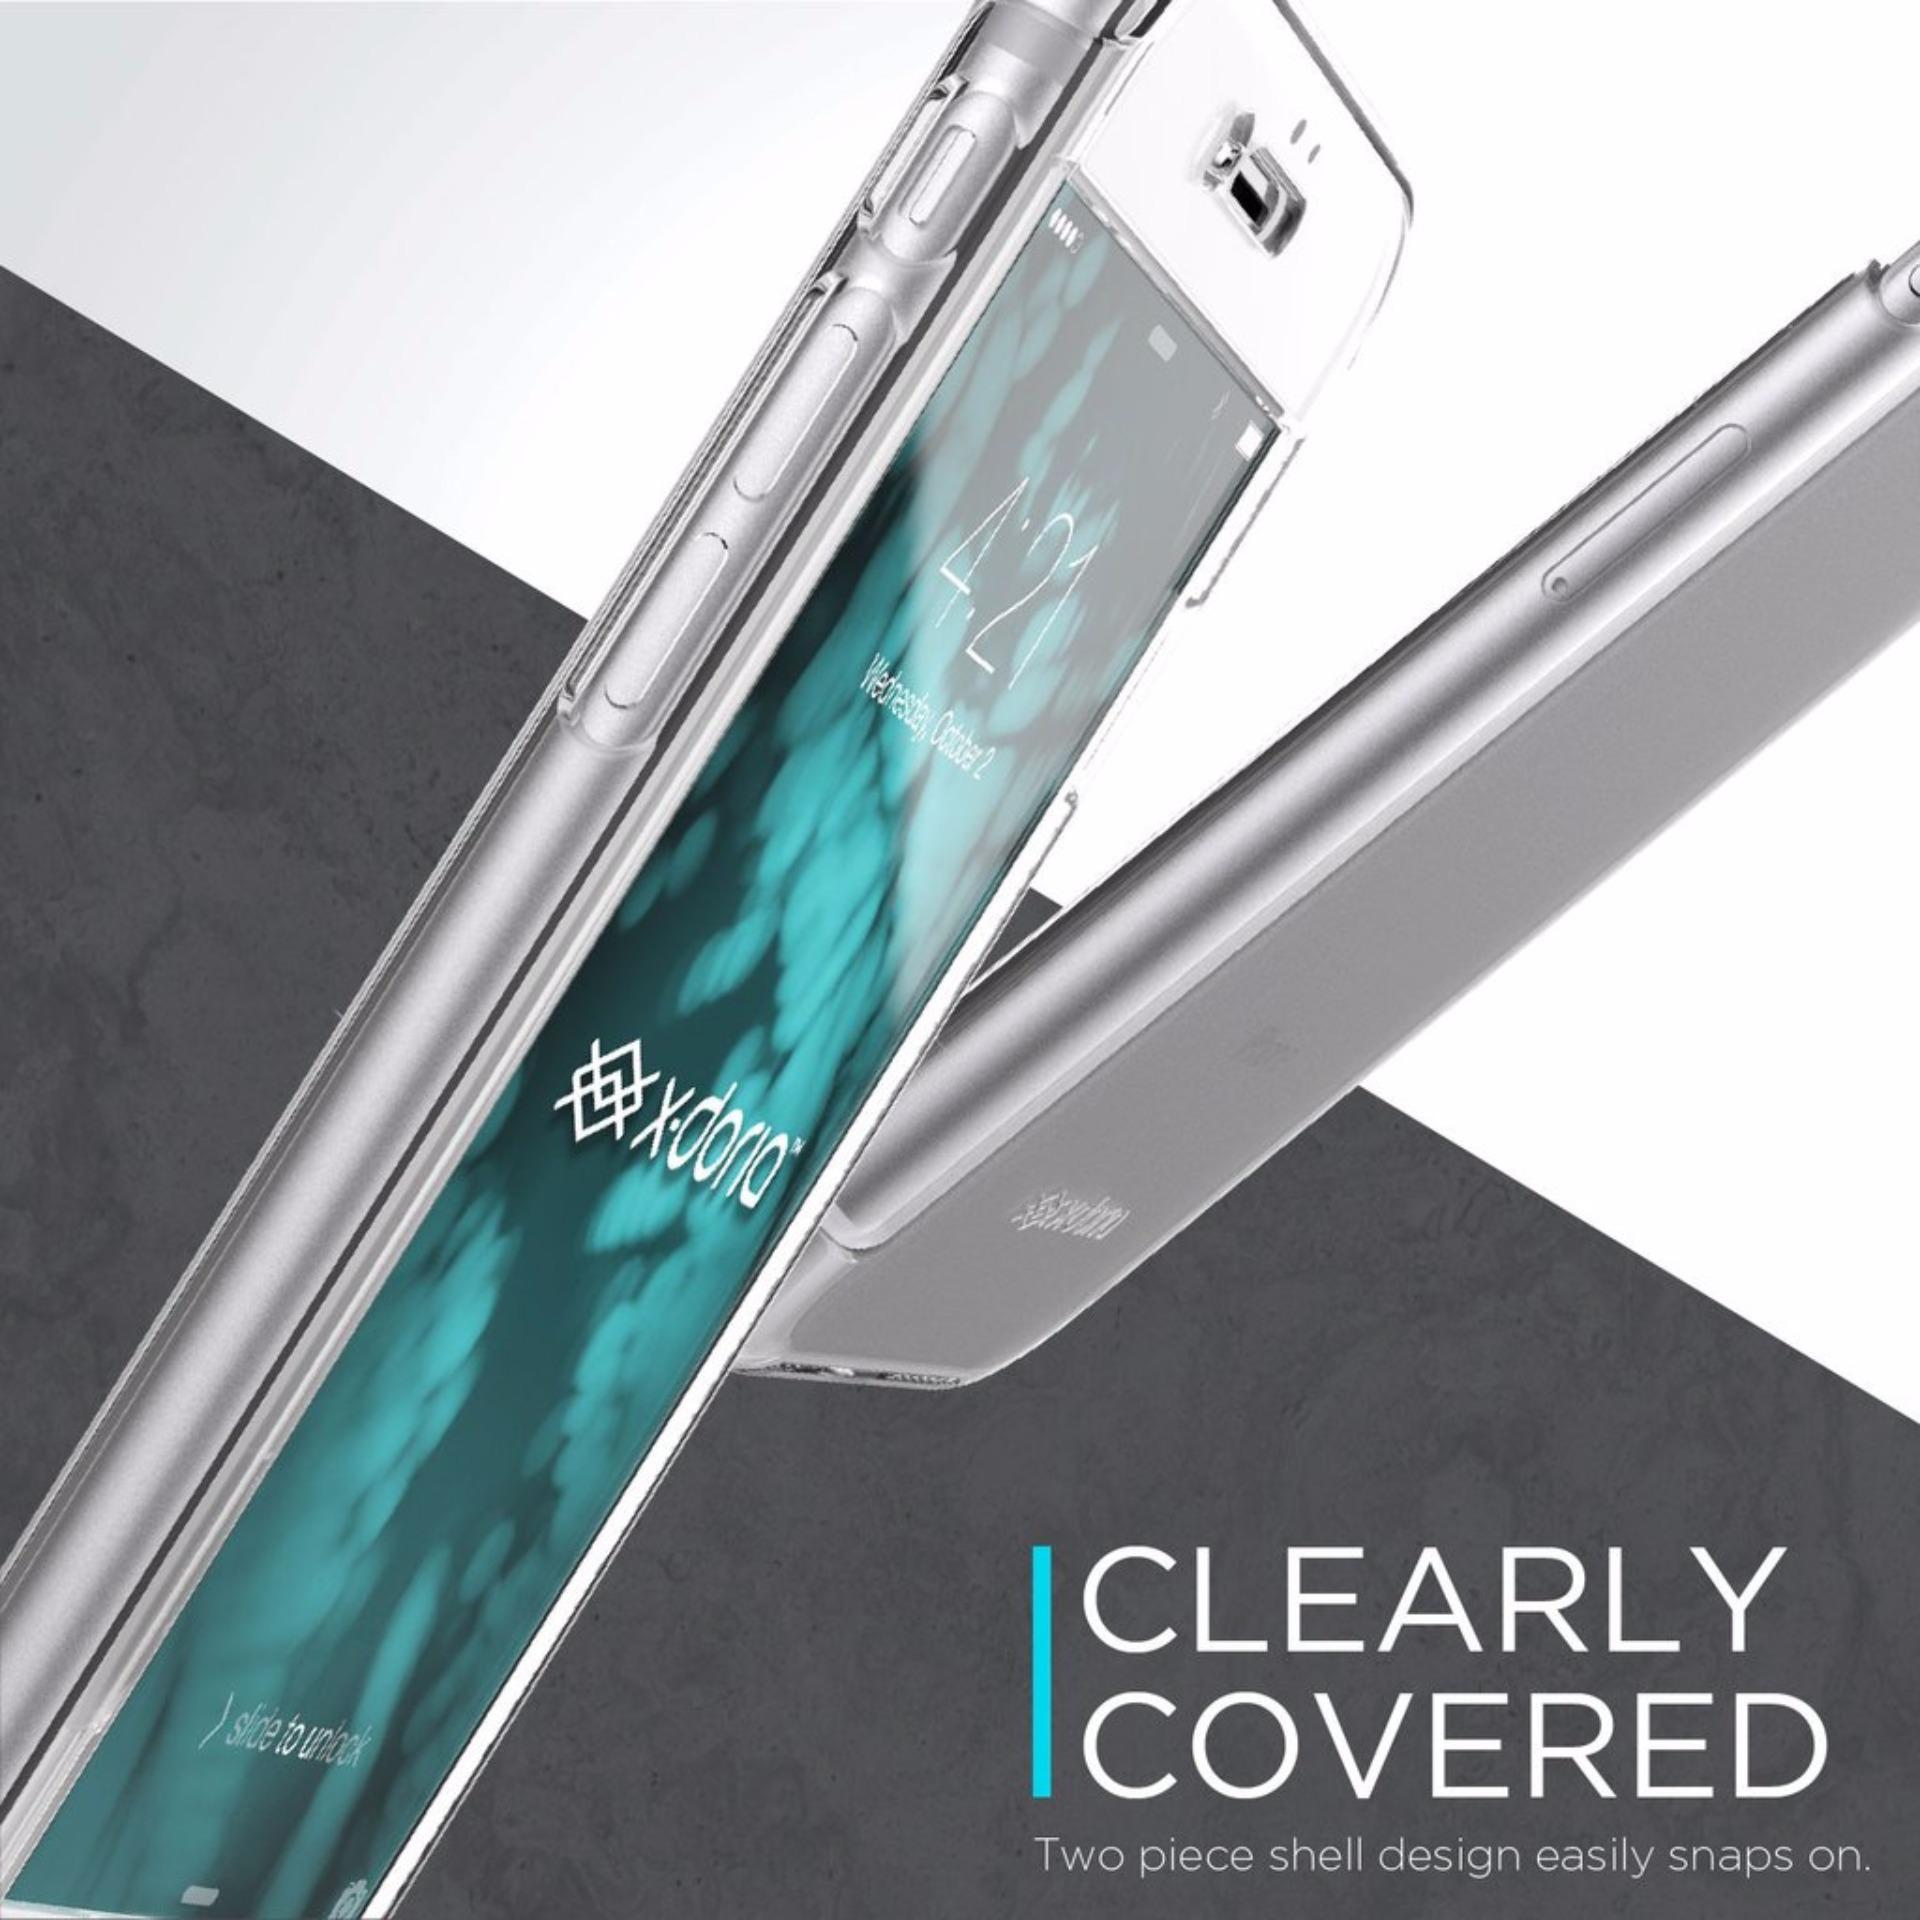 Xdoria iPhone8 / 7 Case Defense Glass 360